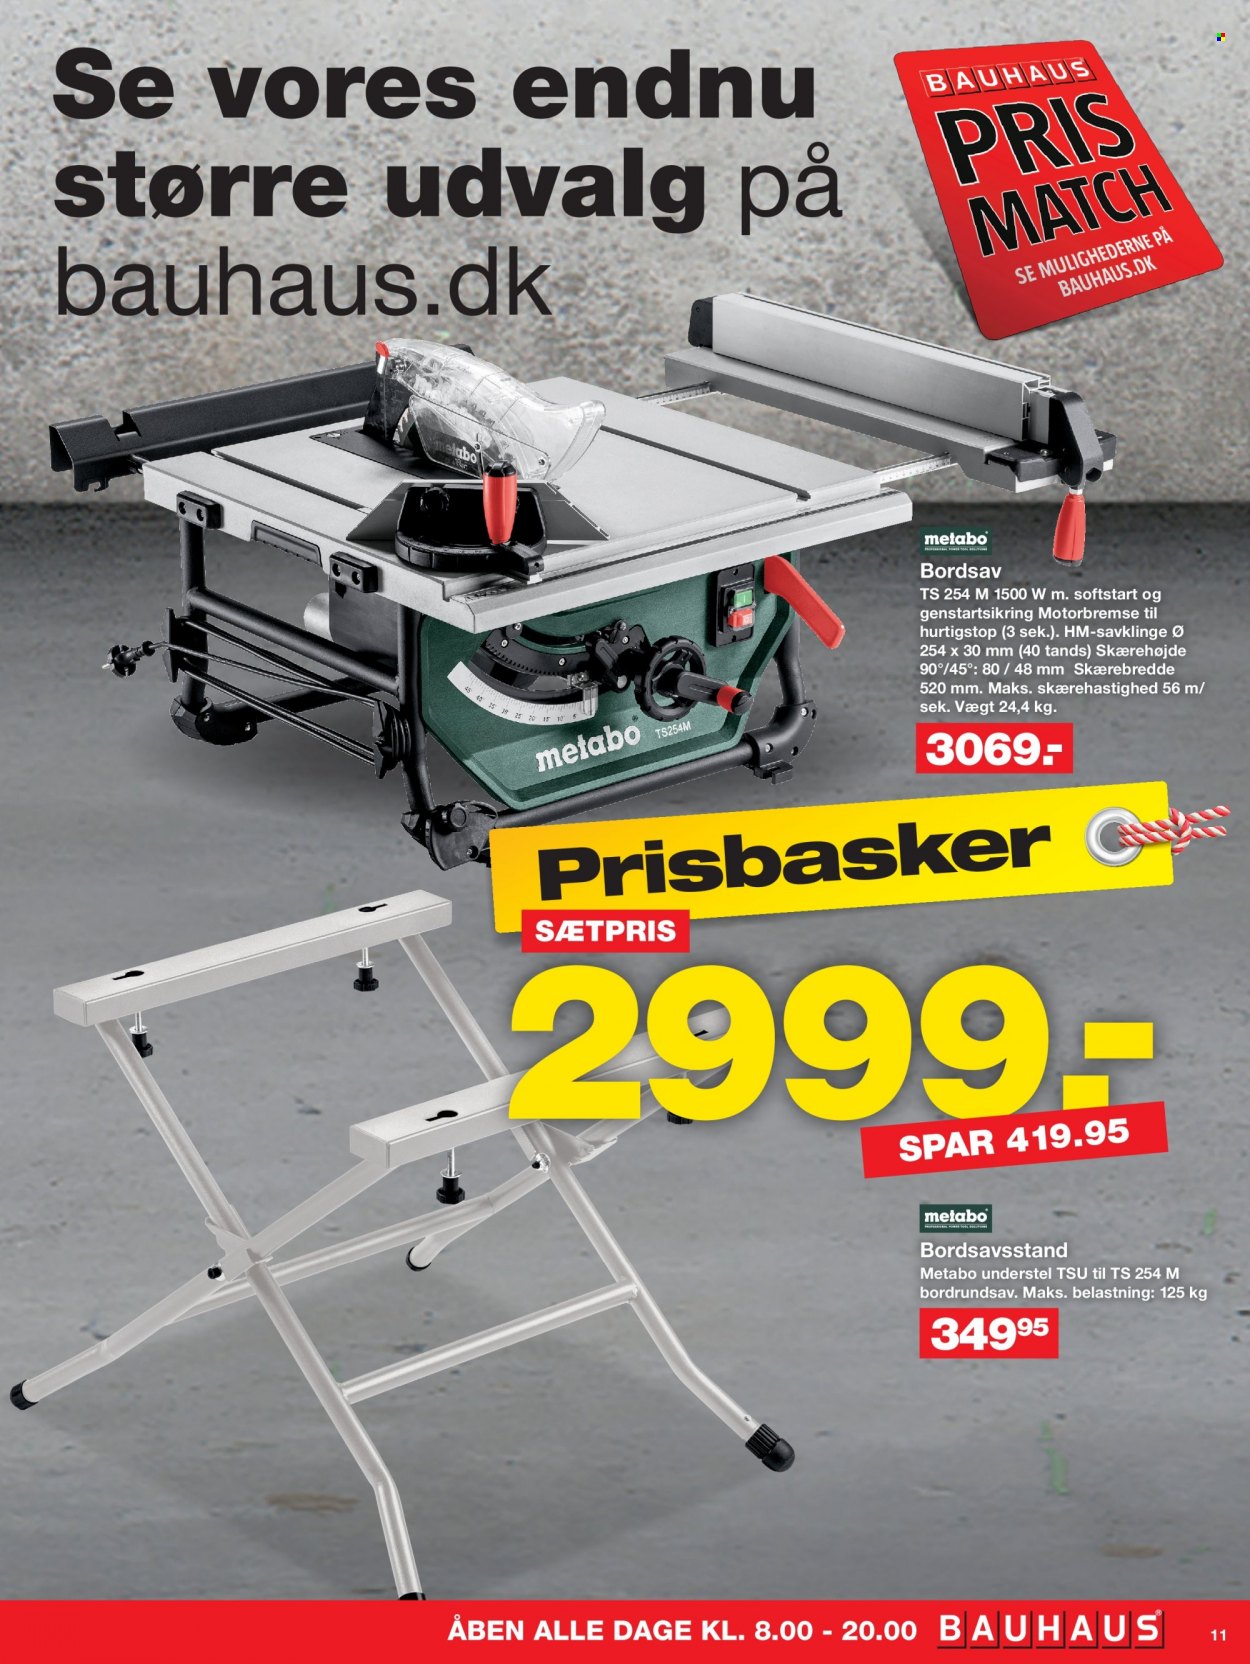 Bauhaus tilbudsavis  - 01.10.2021 - 07.10.2021. Side 11.